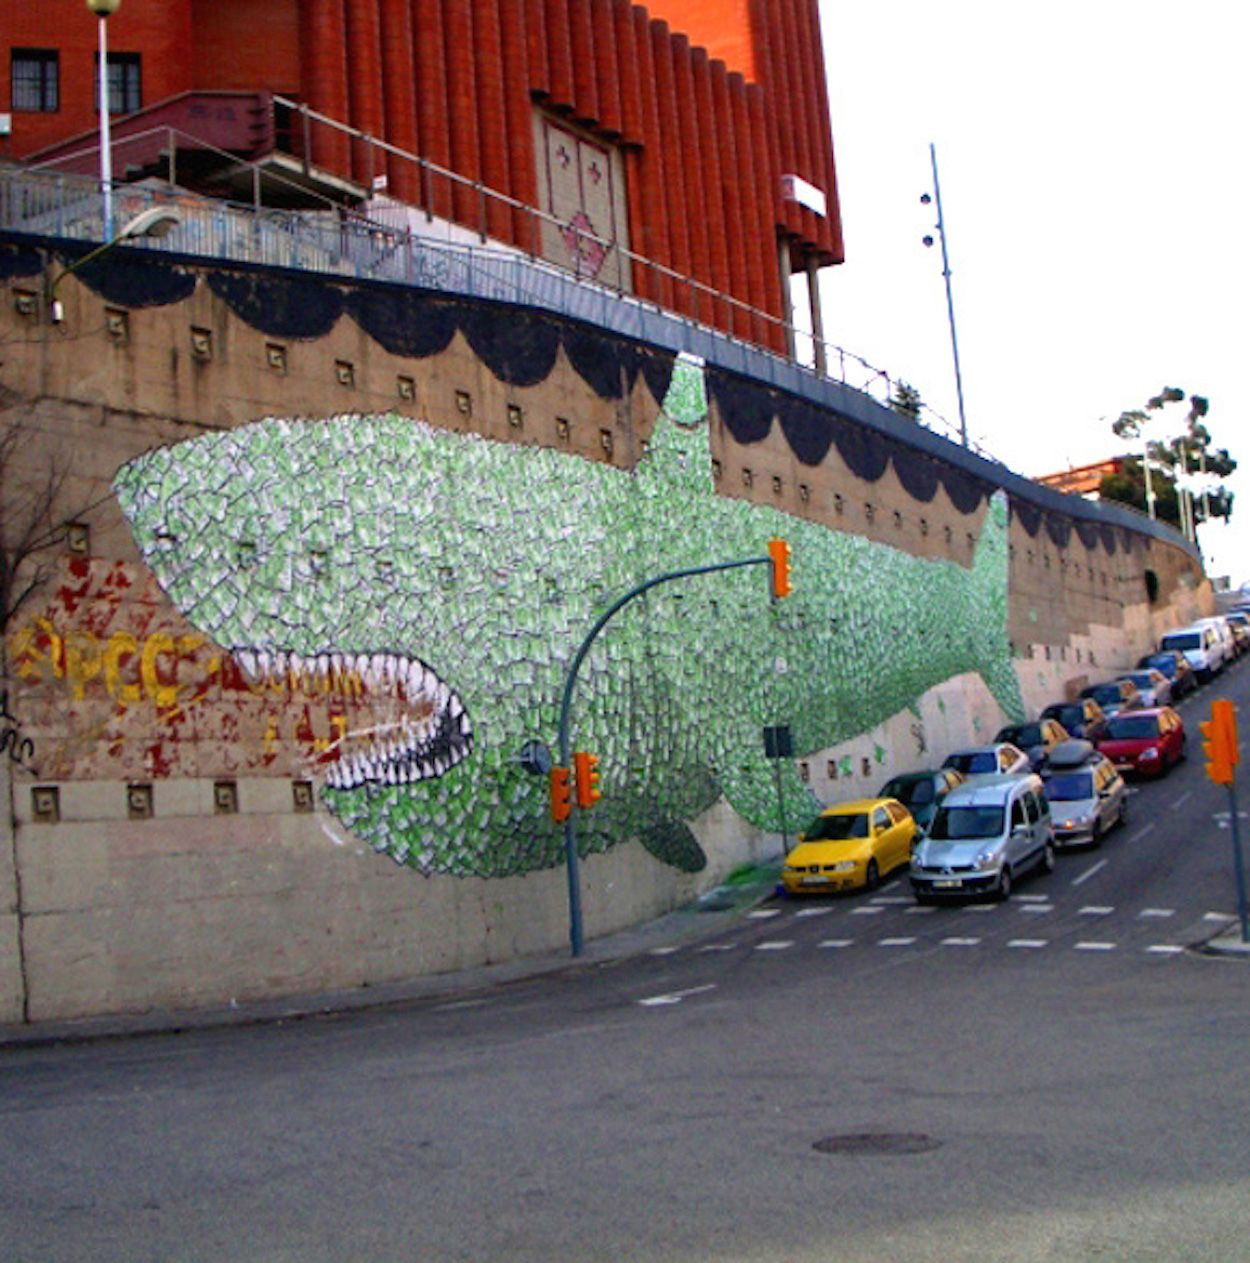 Antiguo mural del tiburón en el barrio del Carmel / @LlibertariesZN